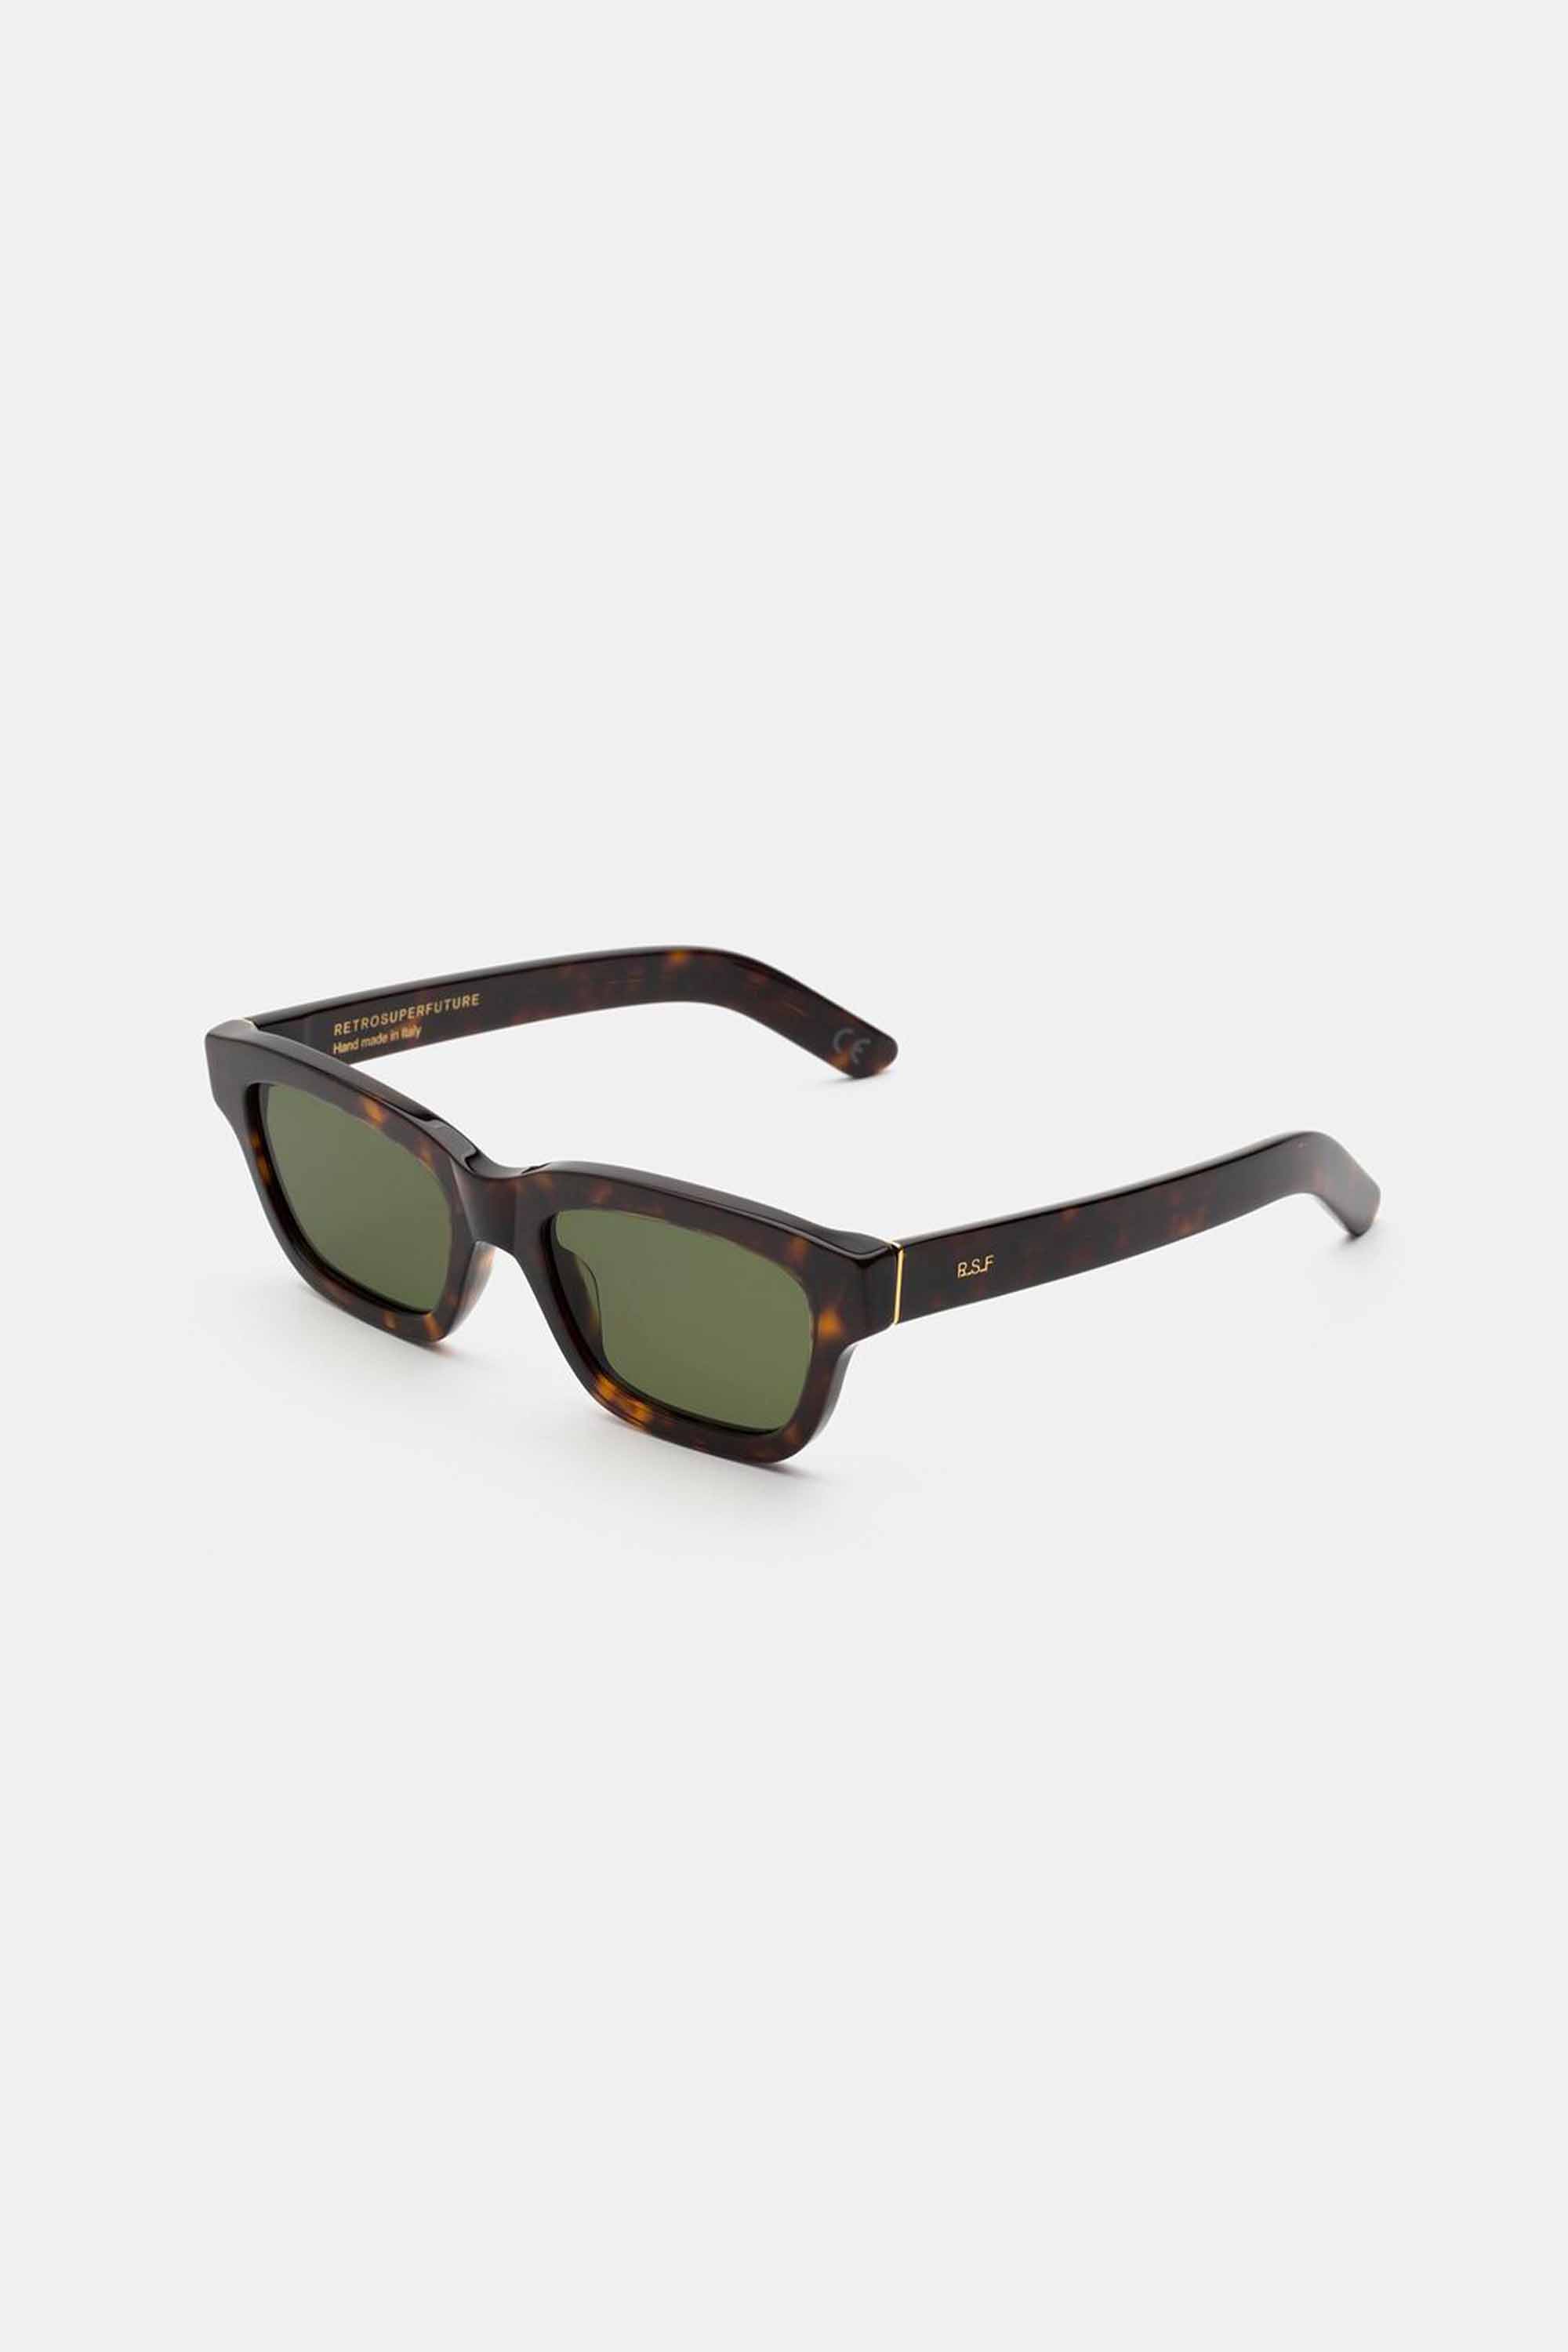 Retrosuperfuture Milano rectangular havana sunglasses - Eyewear Club